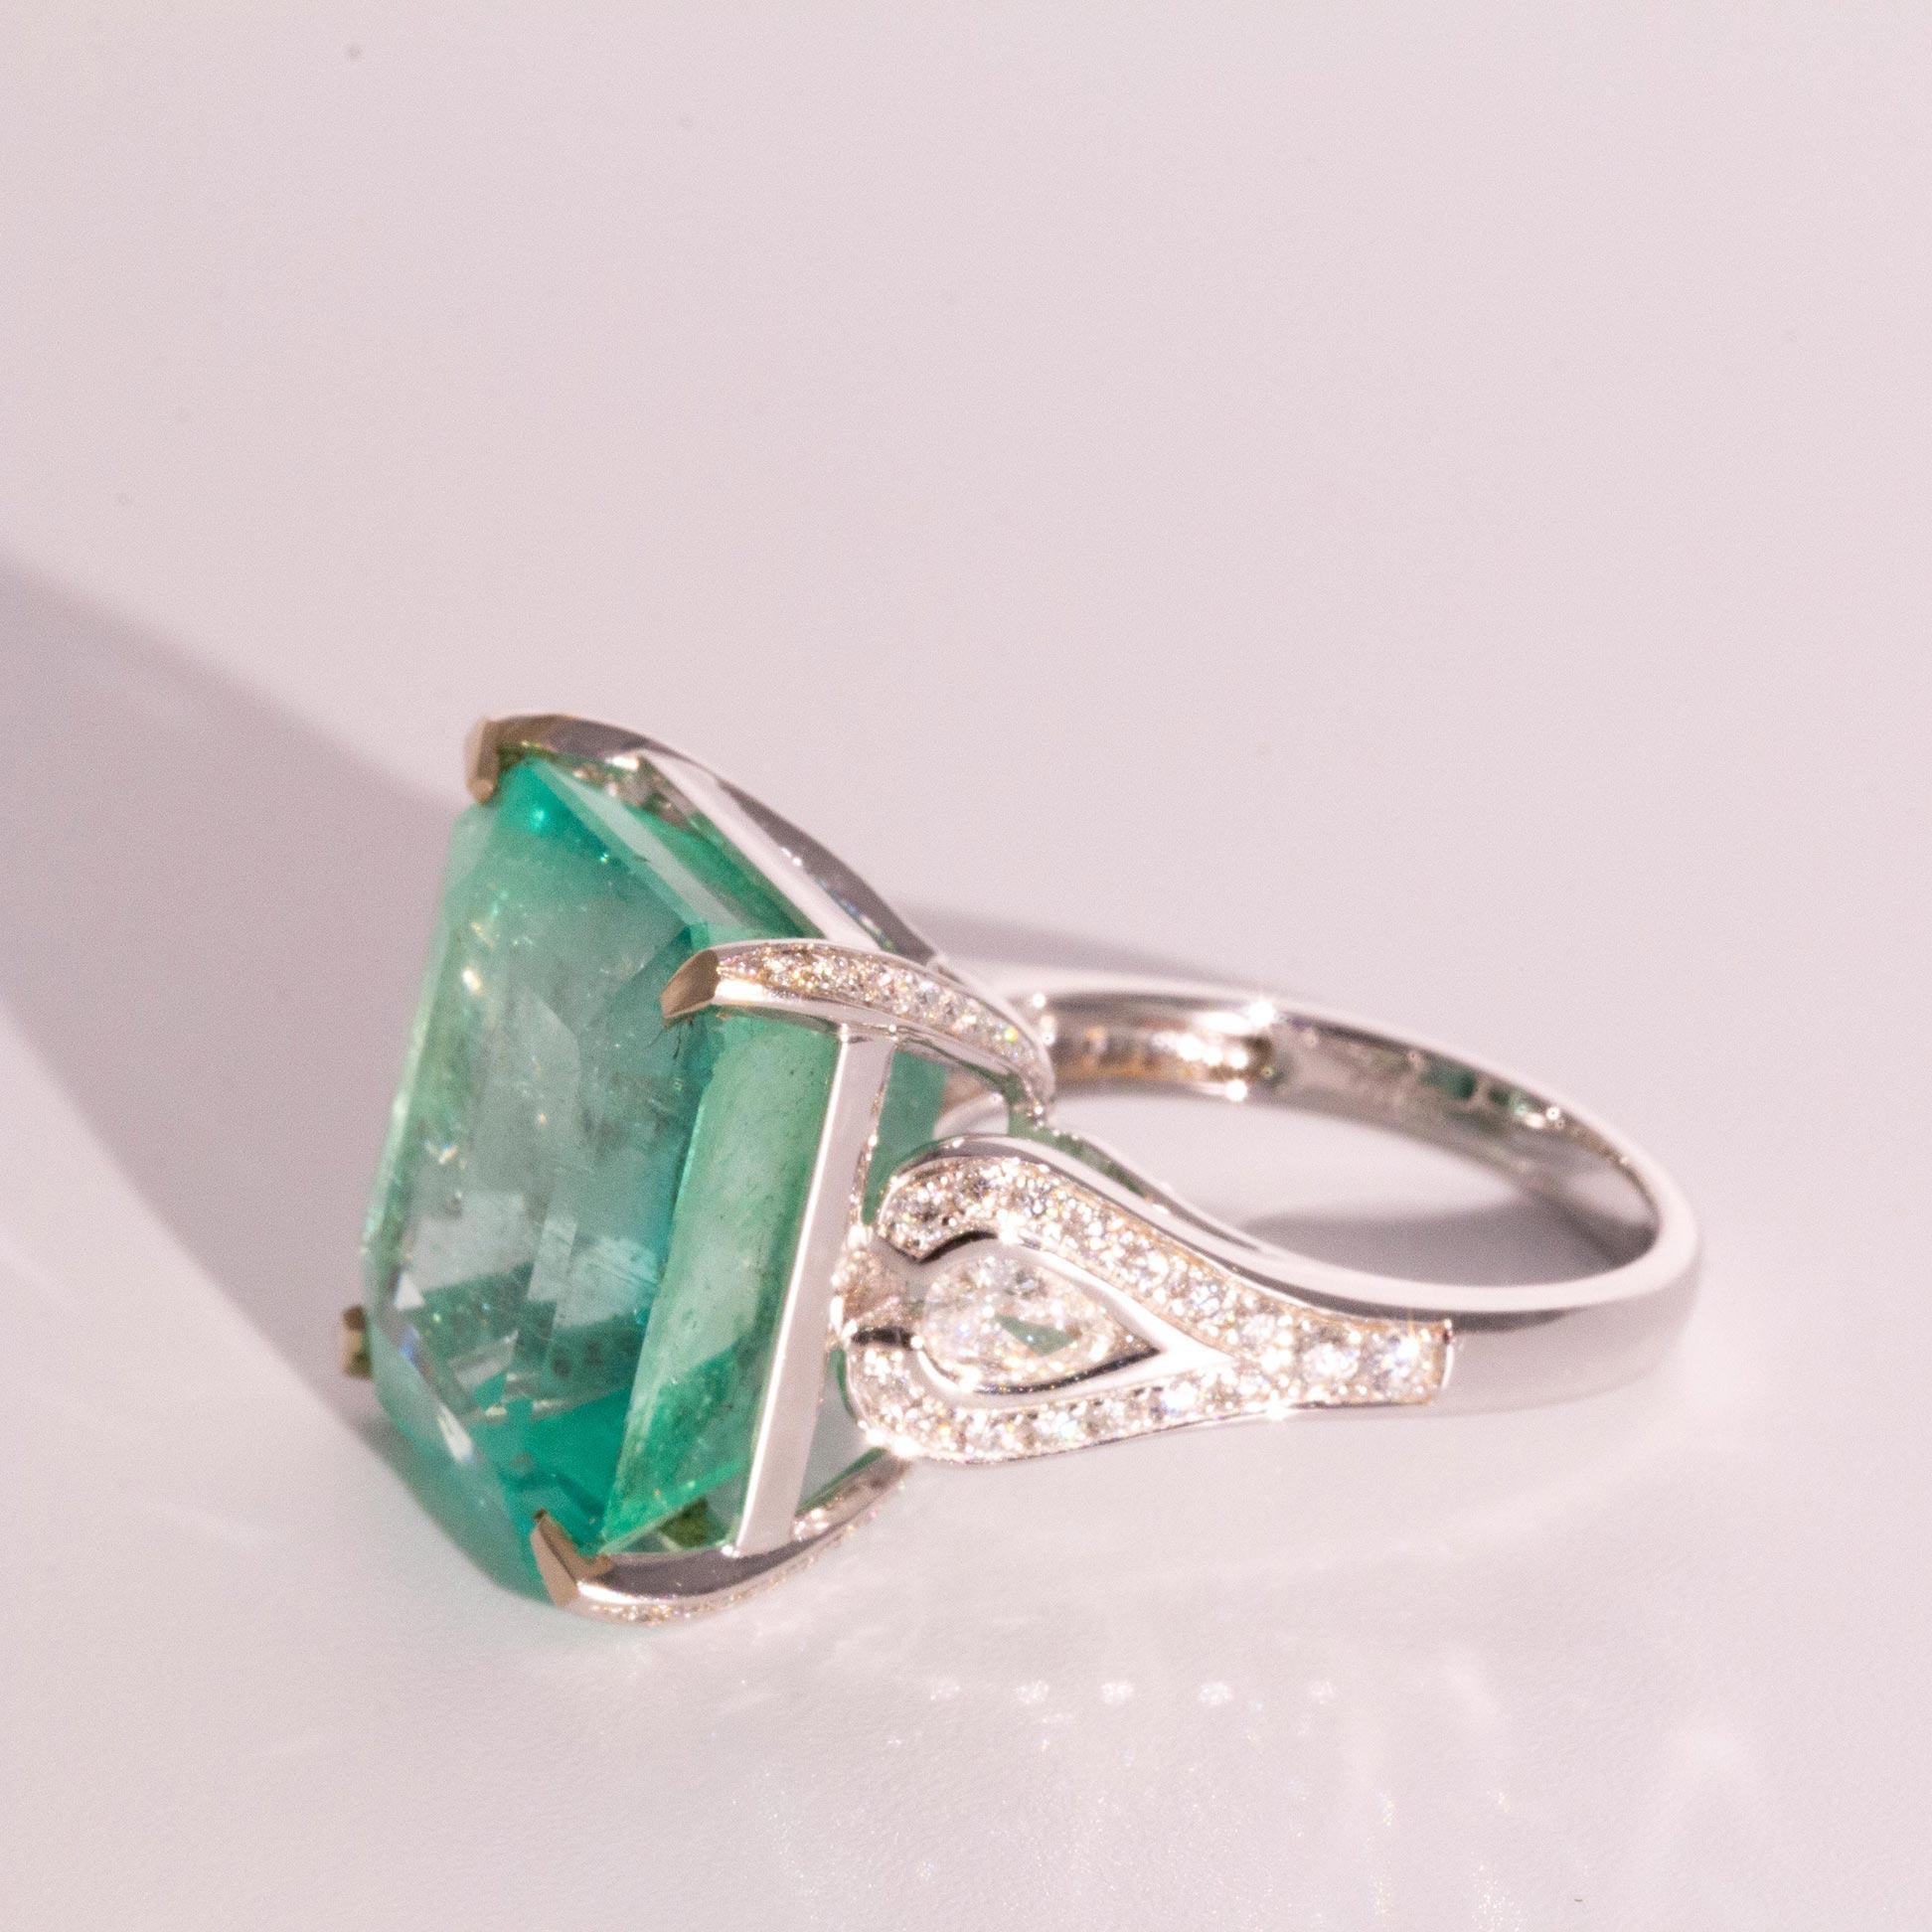 18 carat emerald cut diamond ring